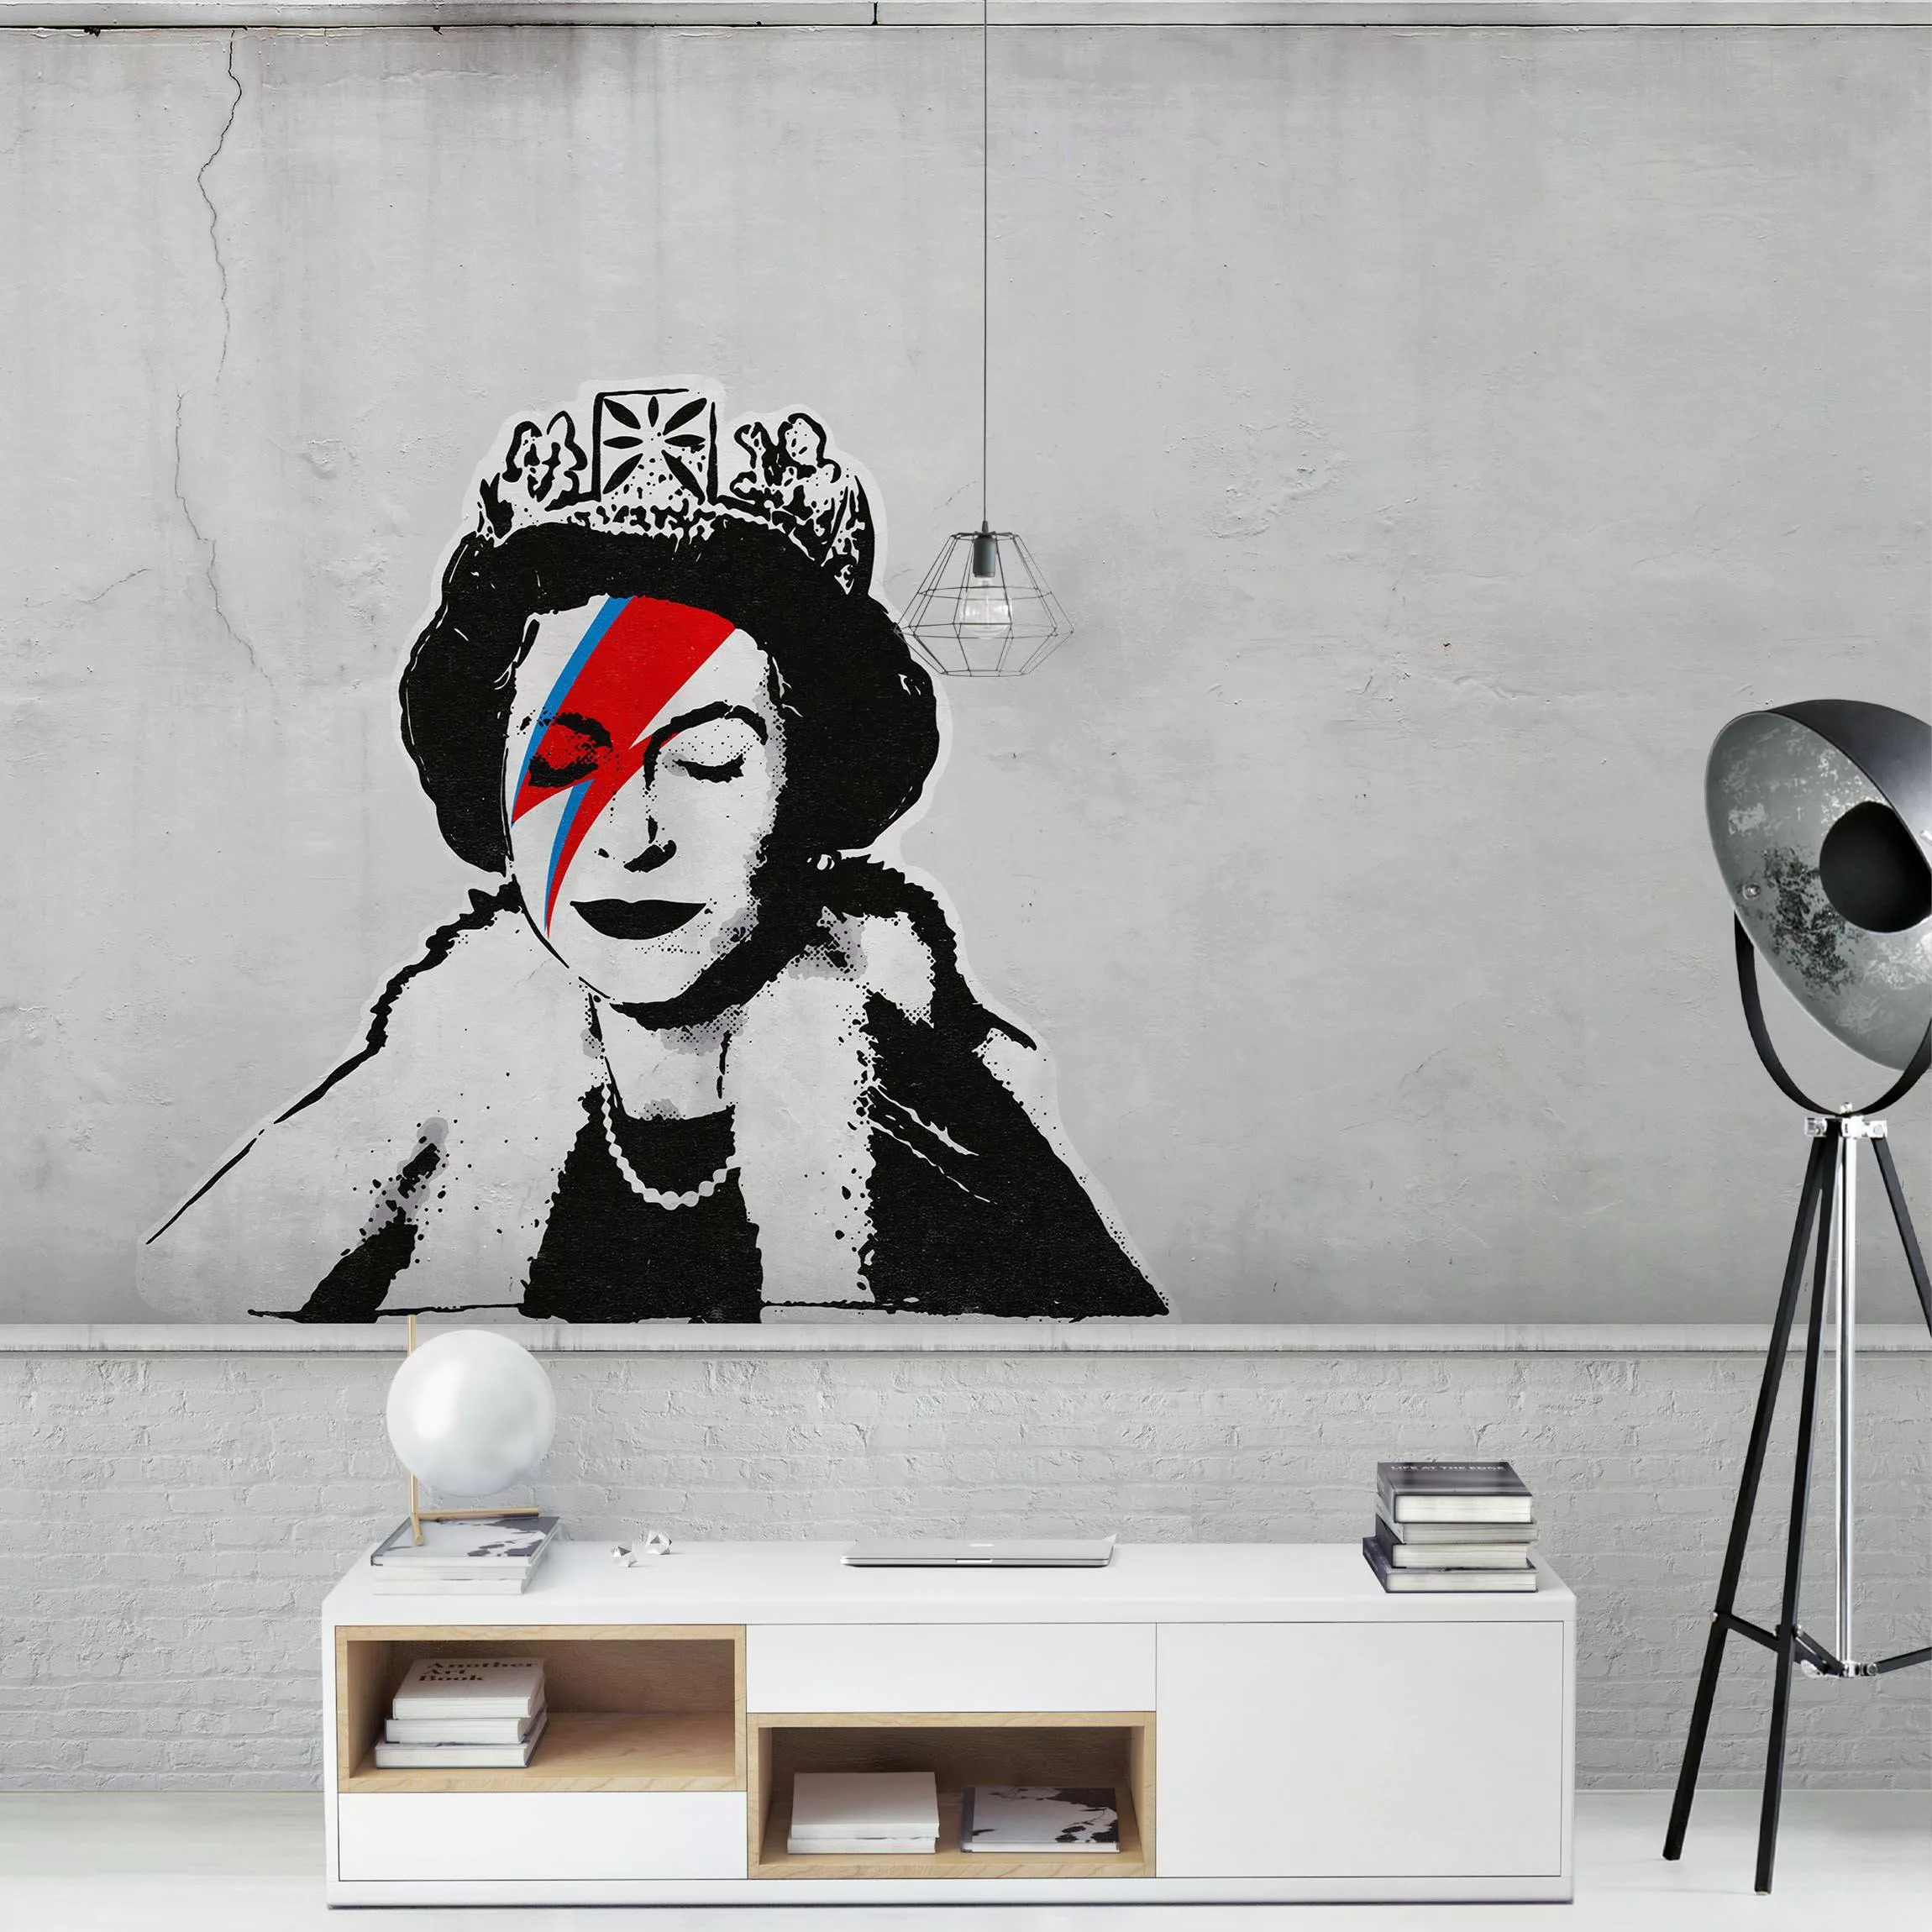 Fototapete Queen Lizzie Stardust - Brandalised ft. Graffiti by Banksy günstig online kaufen